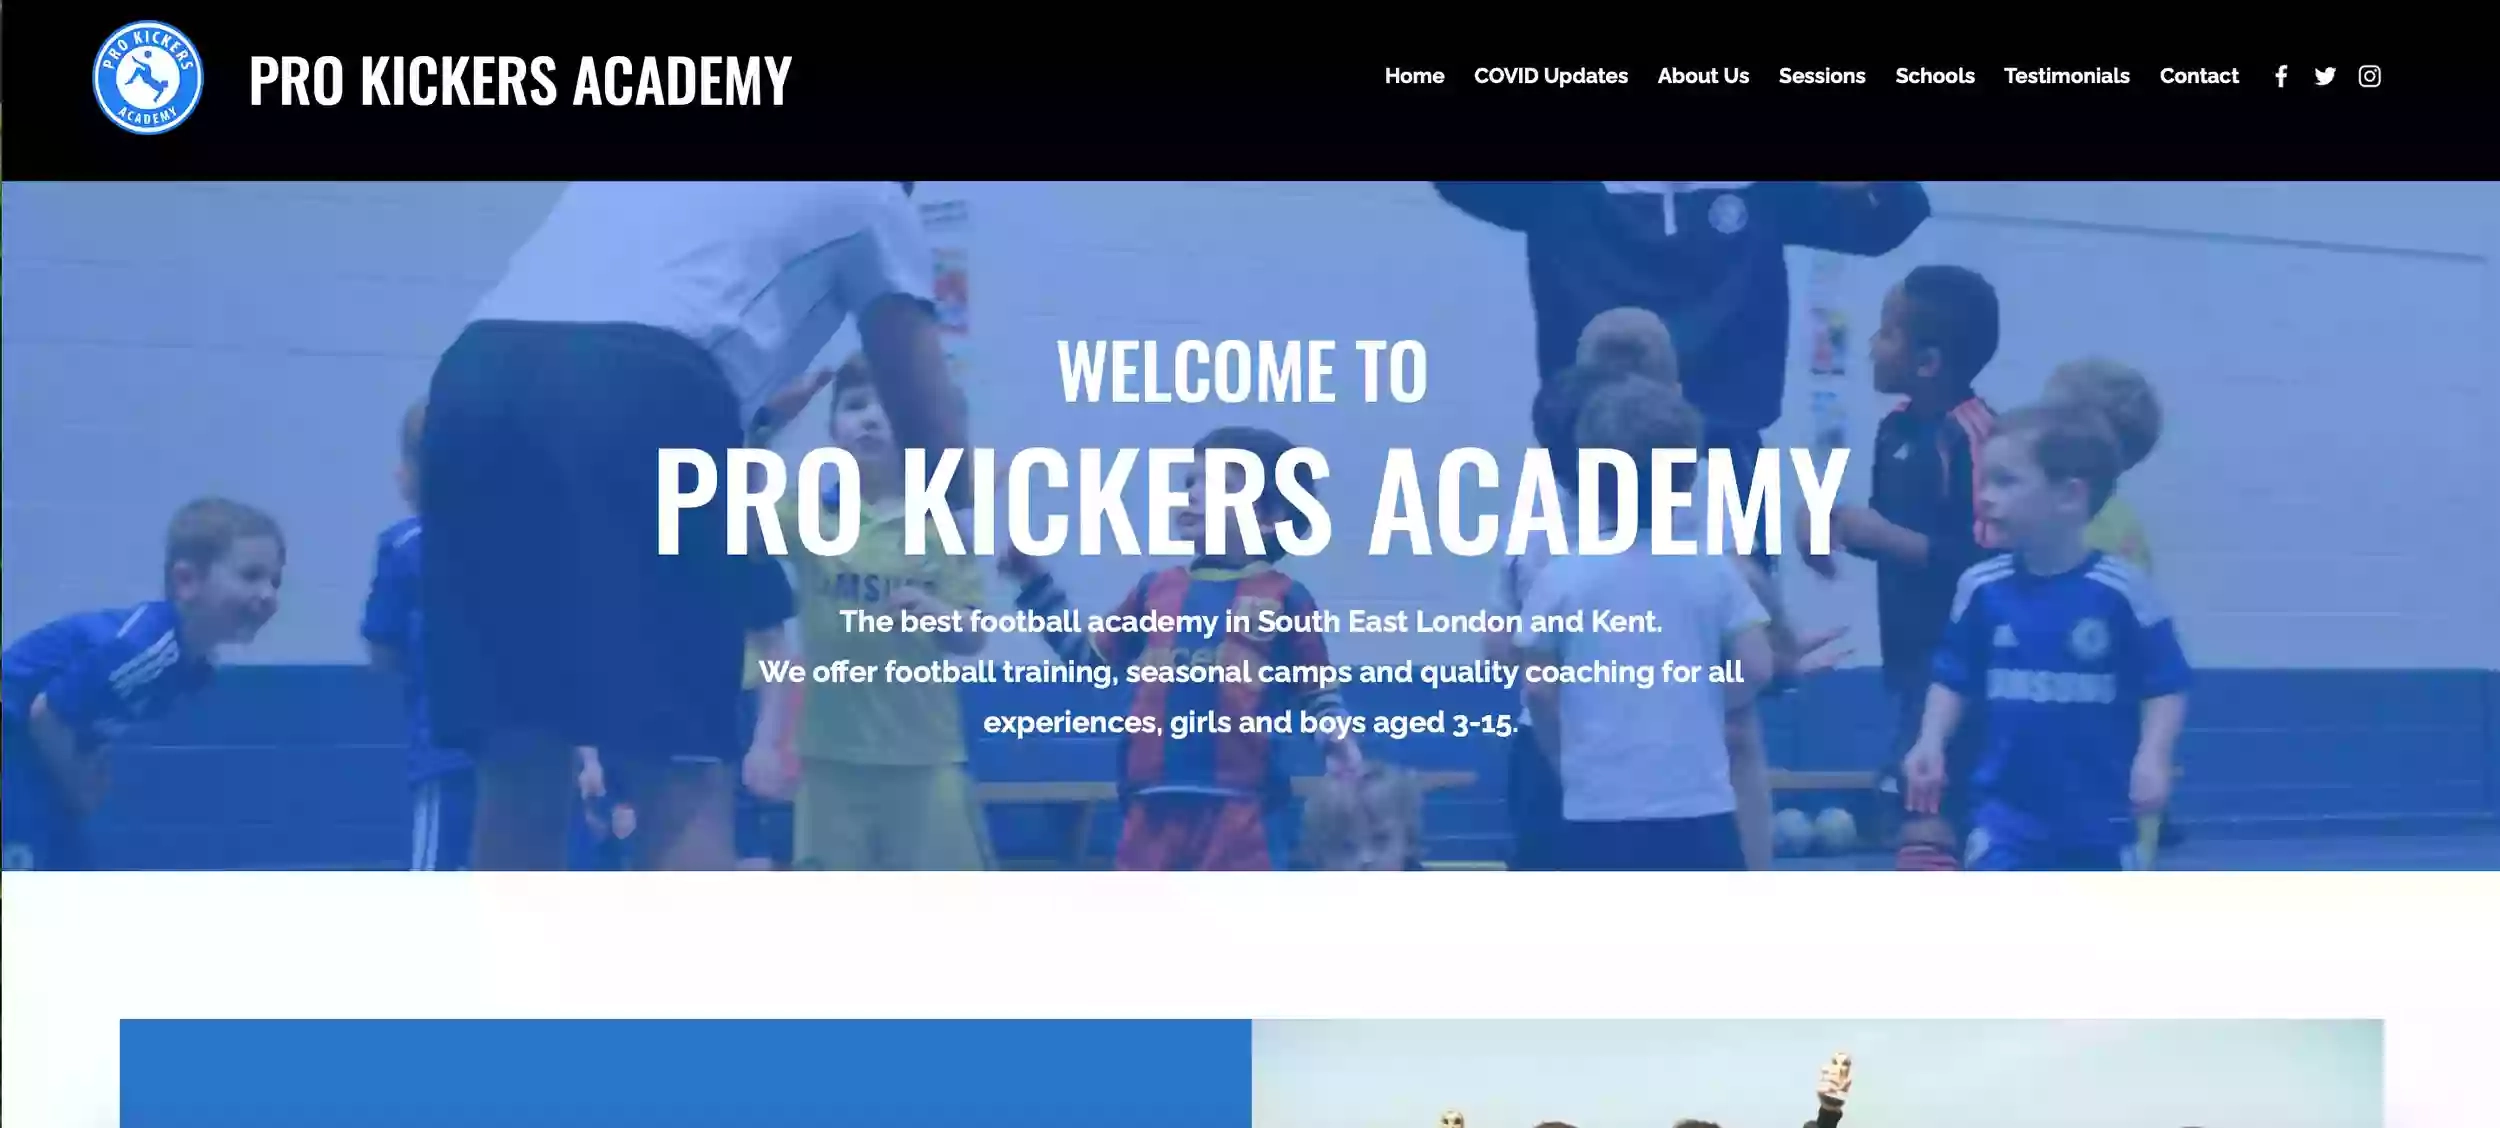 Pro Kickers Academy